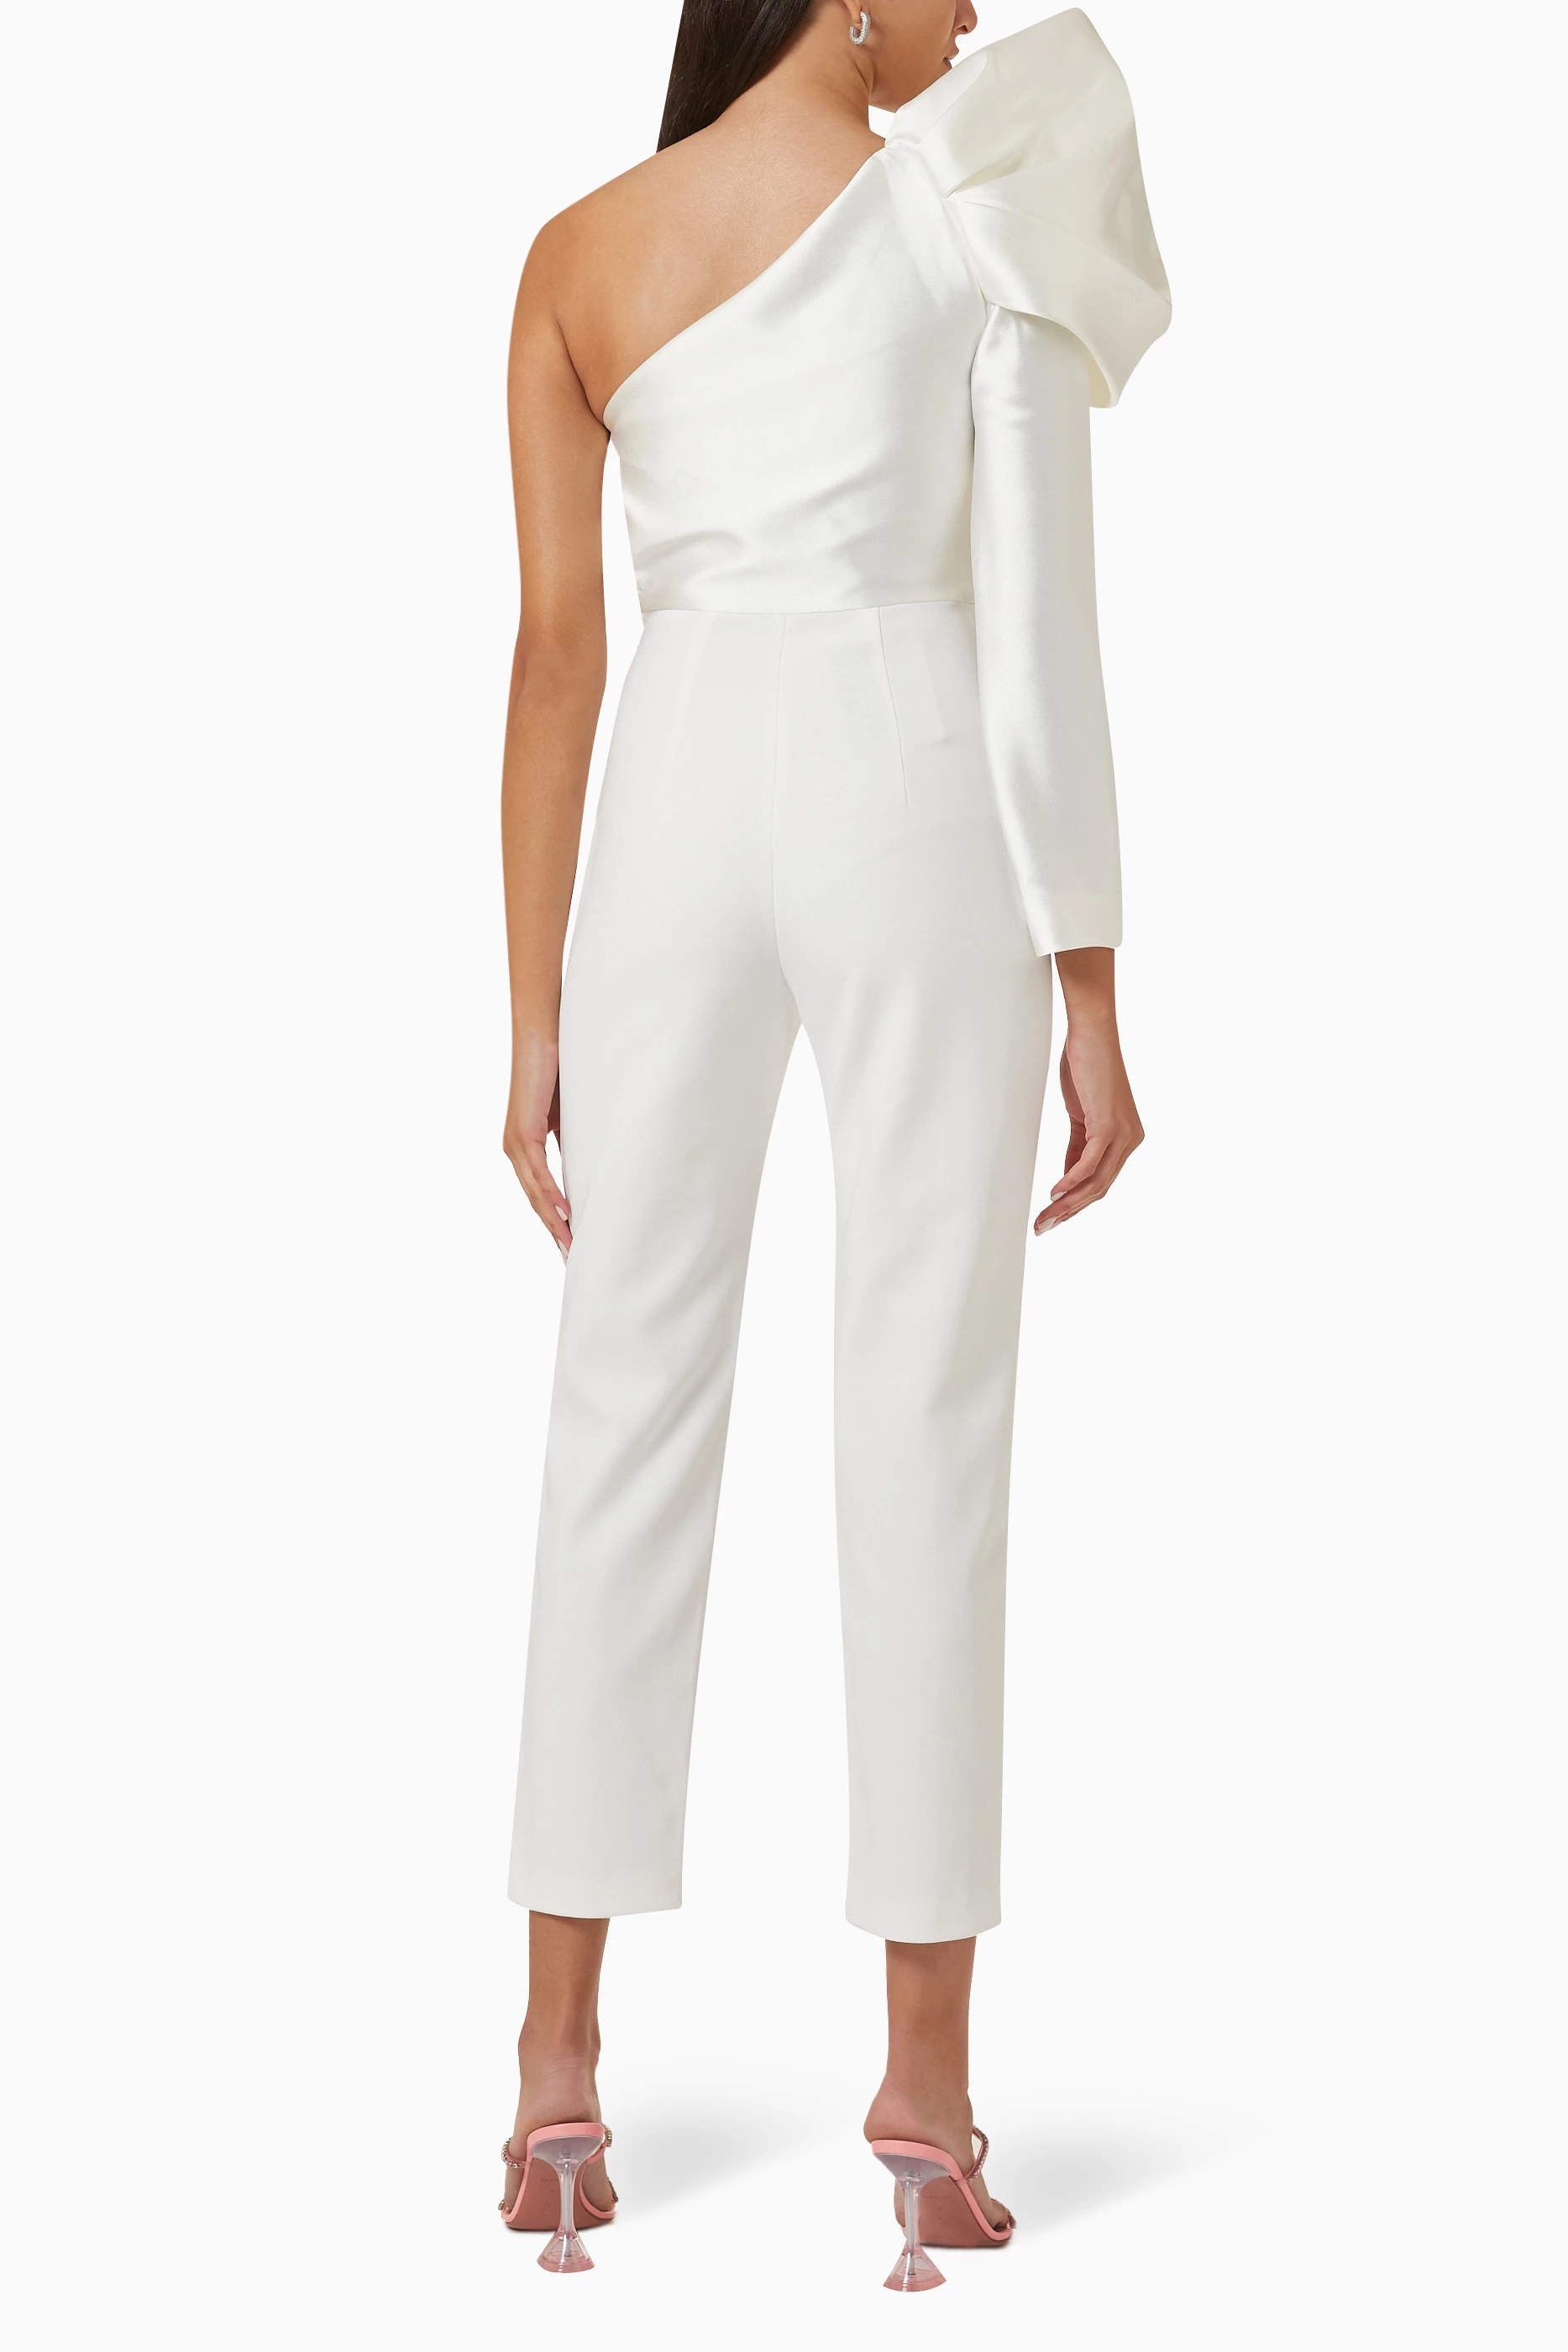 White Short Jumpsuit Penelope - Hazel Women's Clothing Online